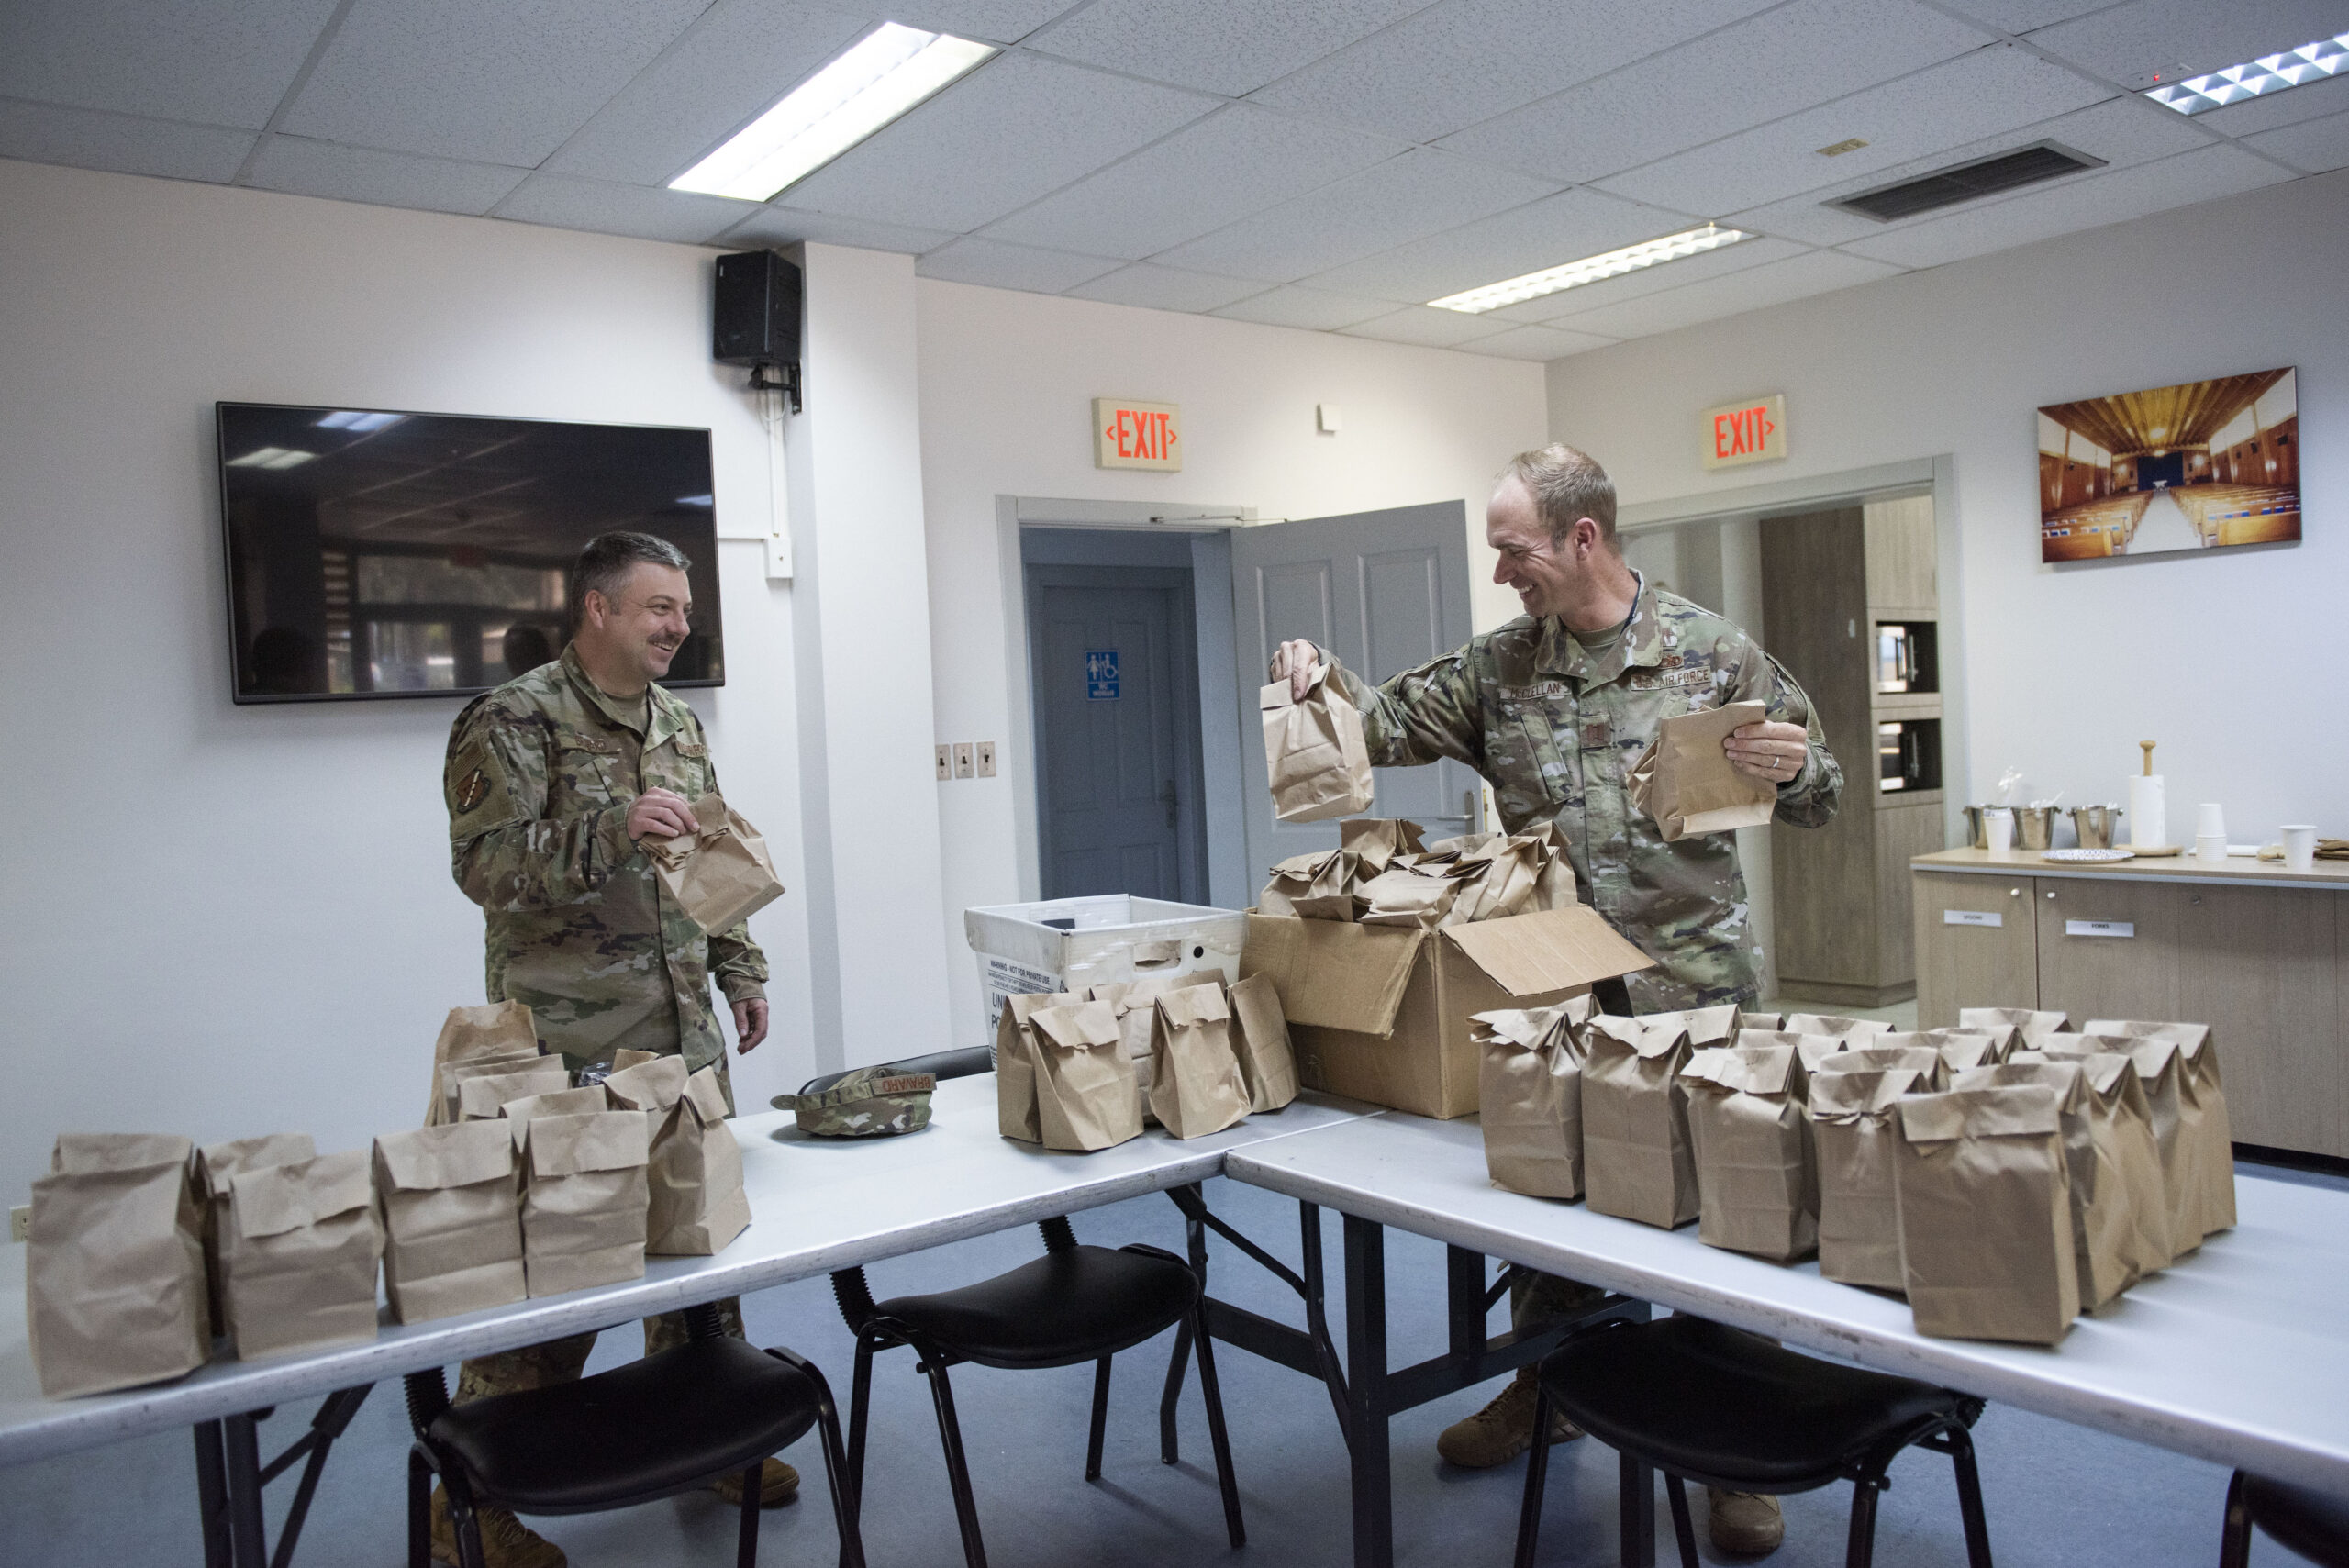 Service members, smiling, box meals in brown paper bags